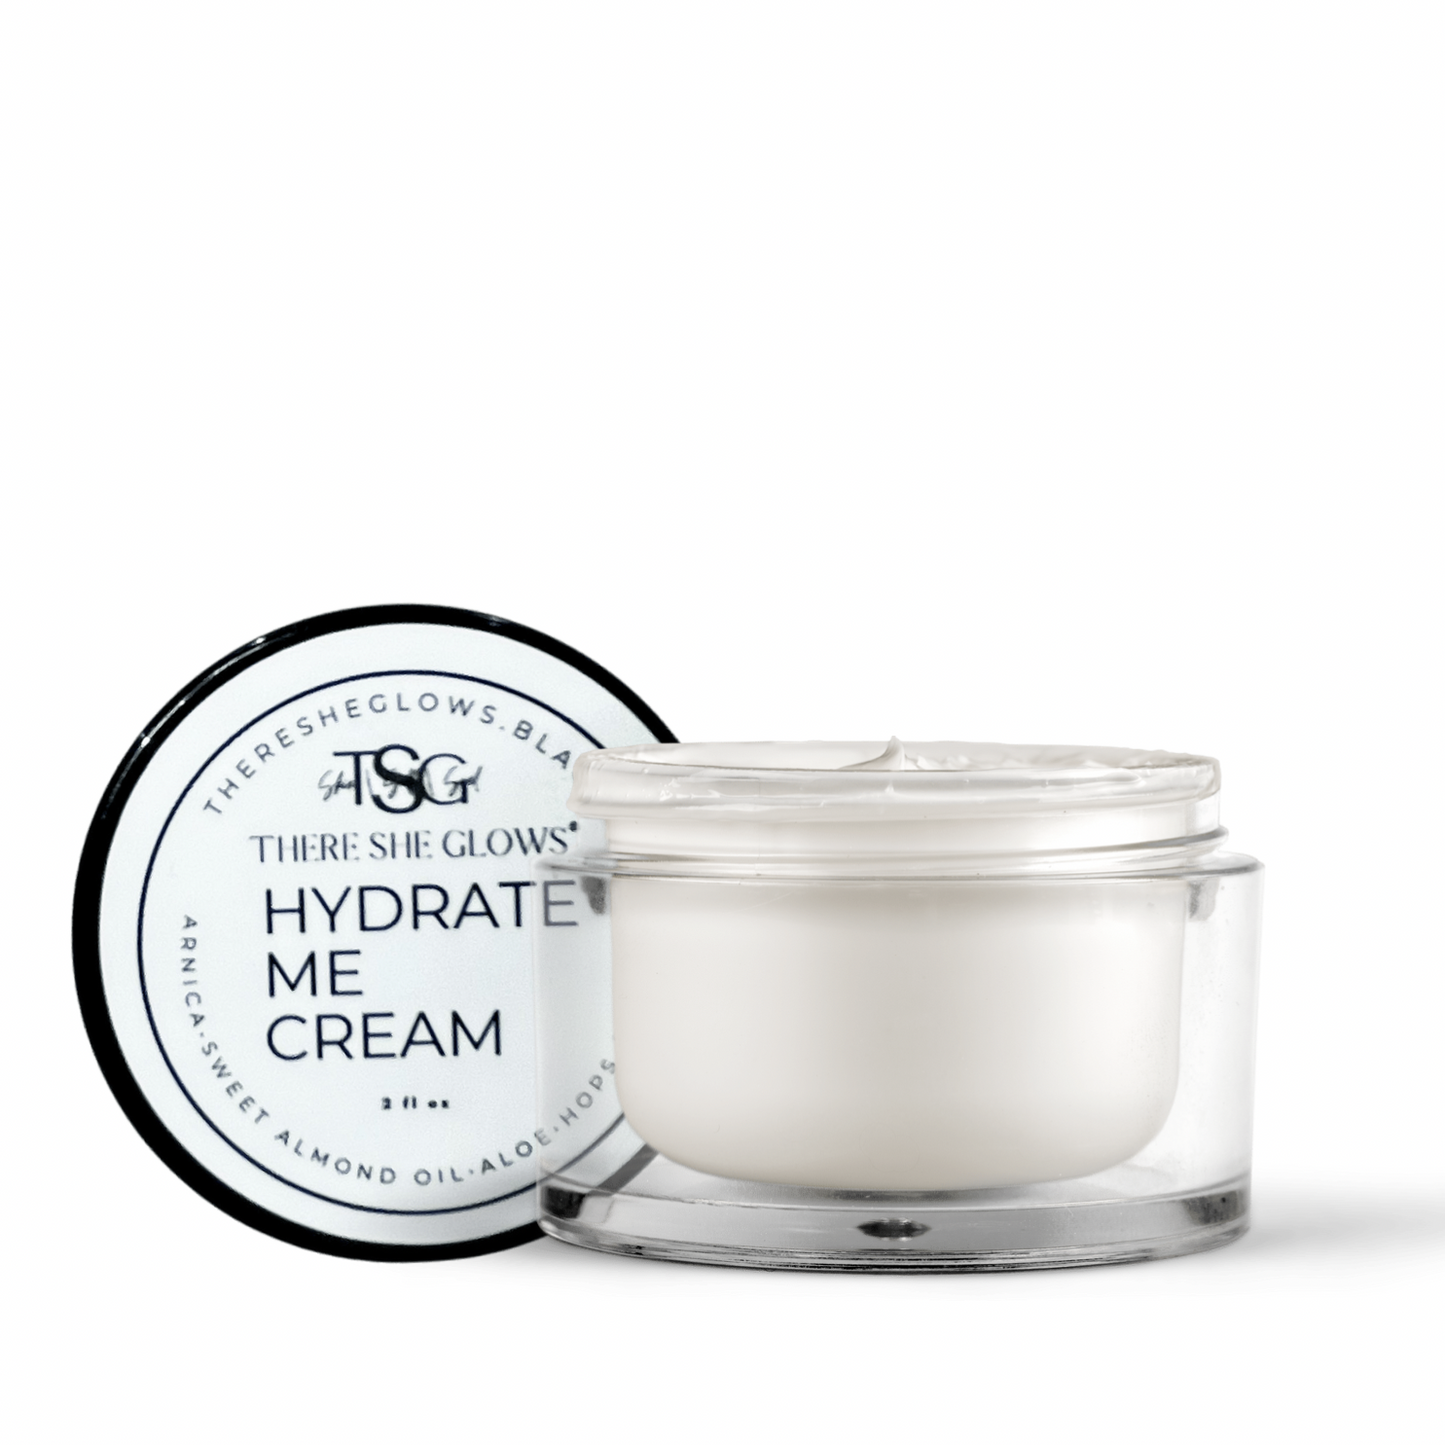 PRE-SALE Hydrate Me Cream ends 10/24 ships 10/27